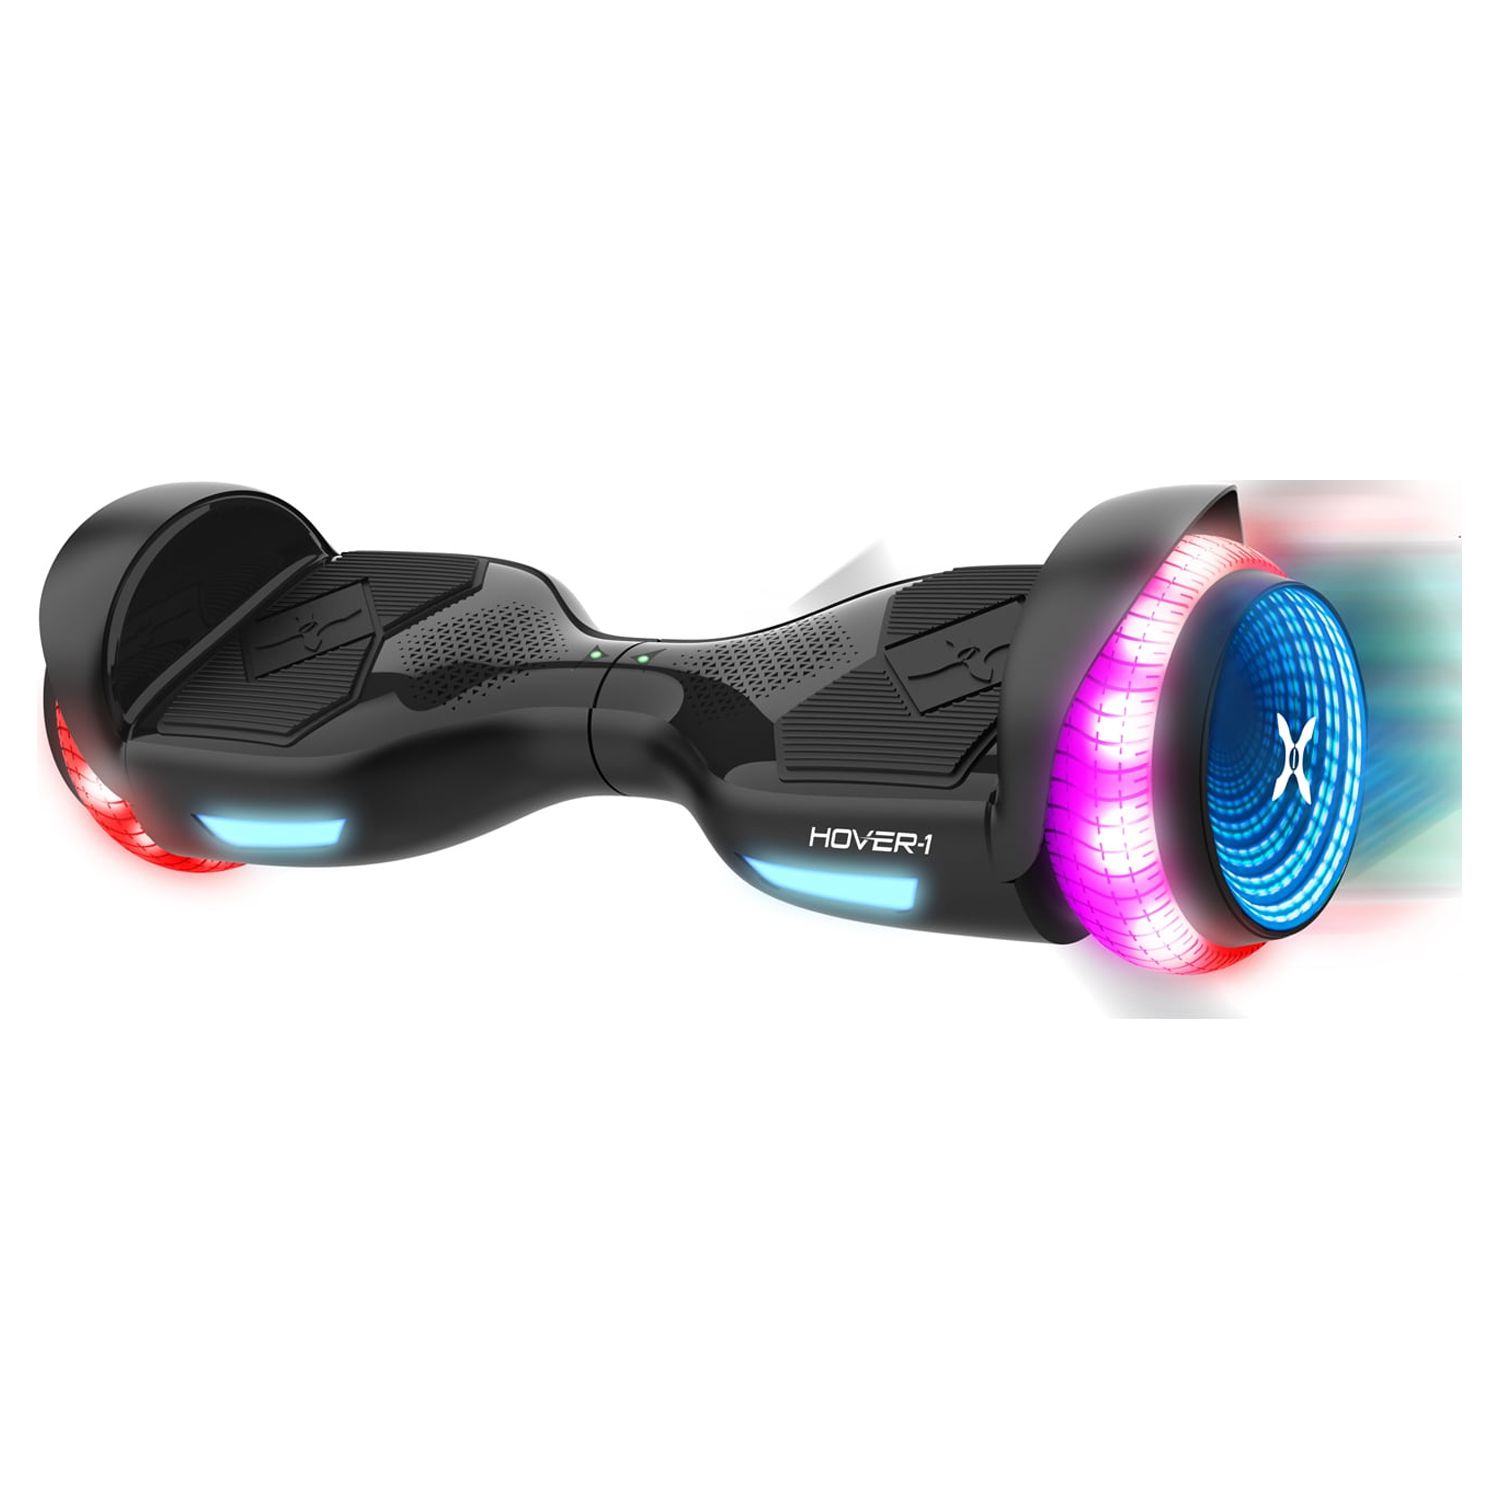 Hover-1 i-200 Hoverboard for Children, Bluetooth Speaker & LED Lights, 7 mph Max Speed, Black - image 1 of 8